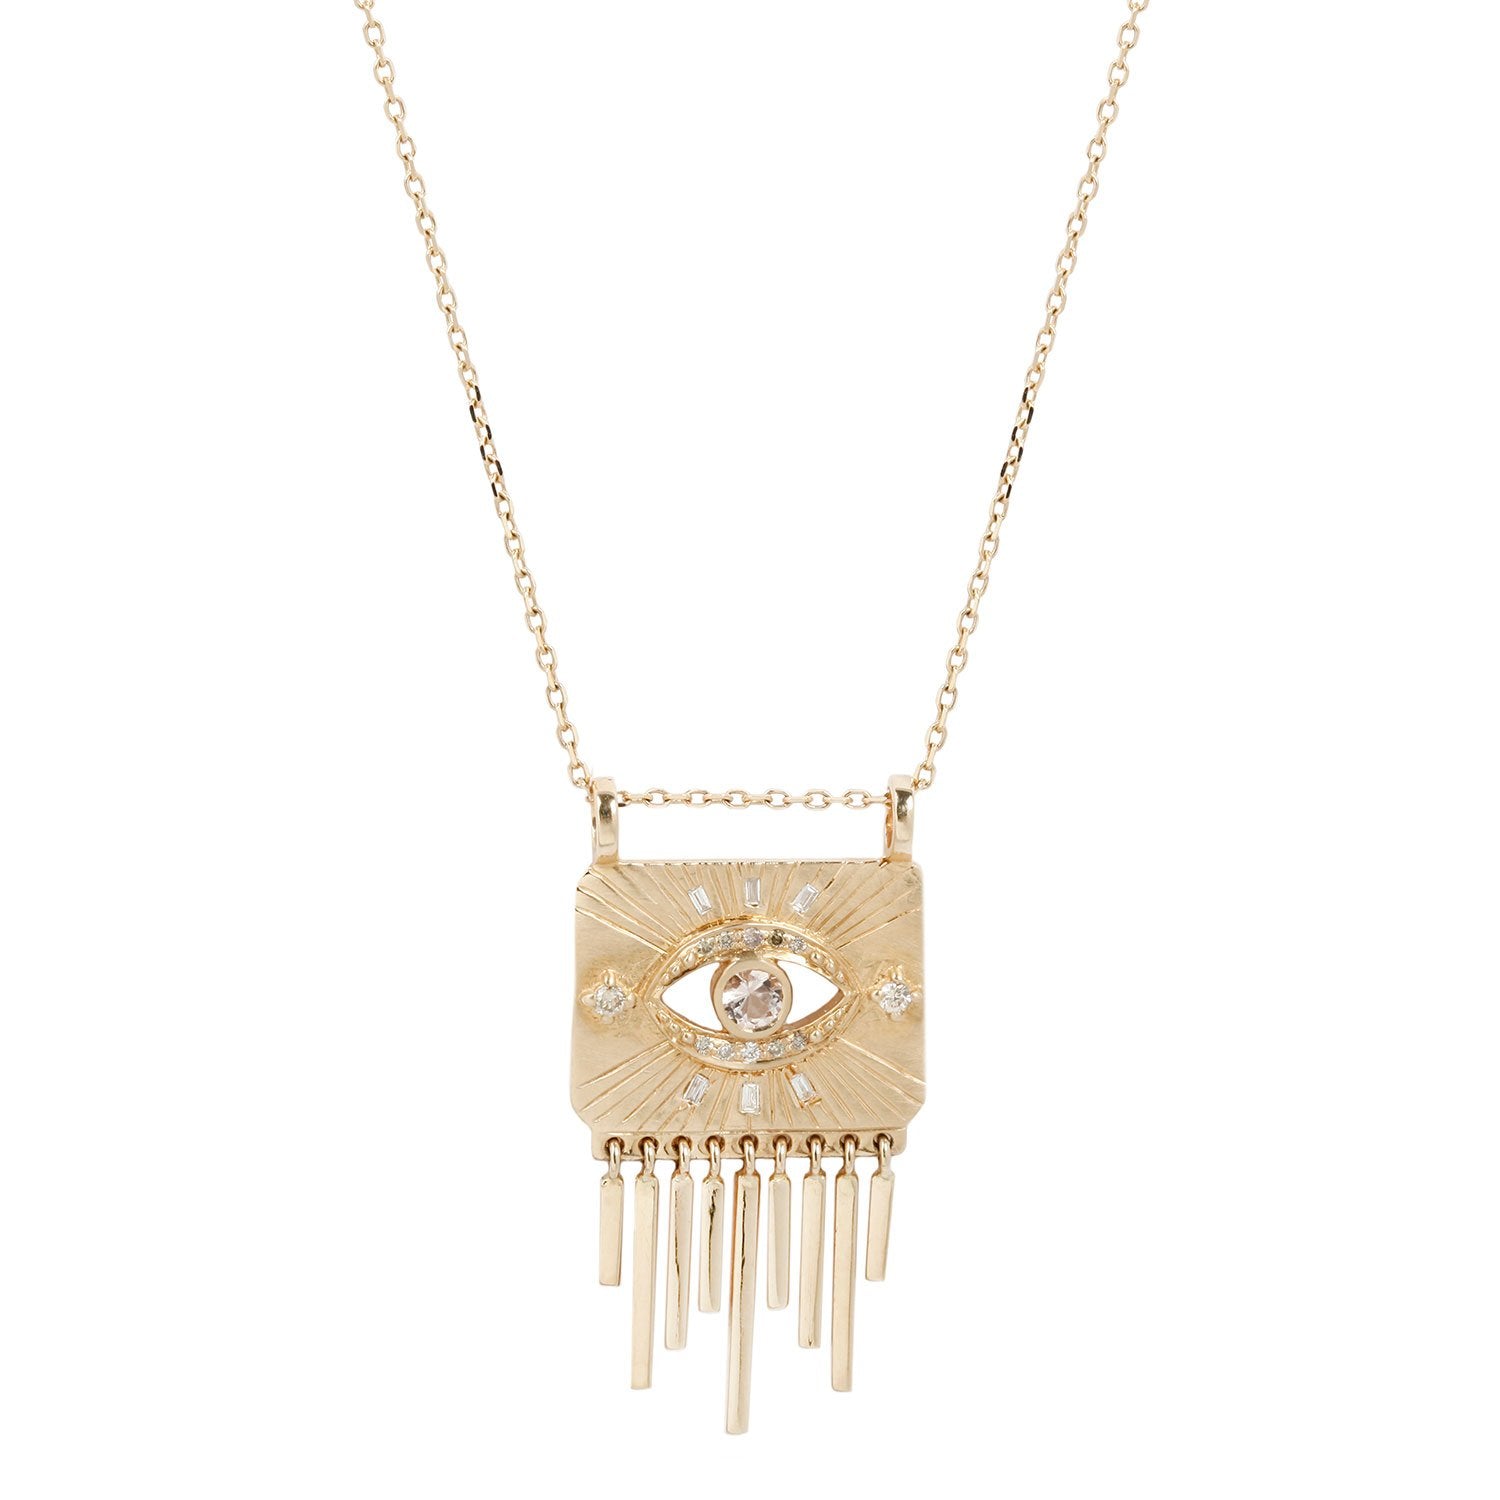 Celine D'Aoust White Sapphire and Diamond Eye Fringe Necklace